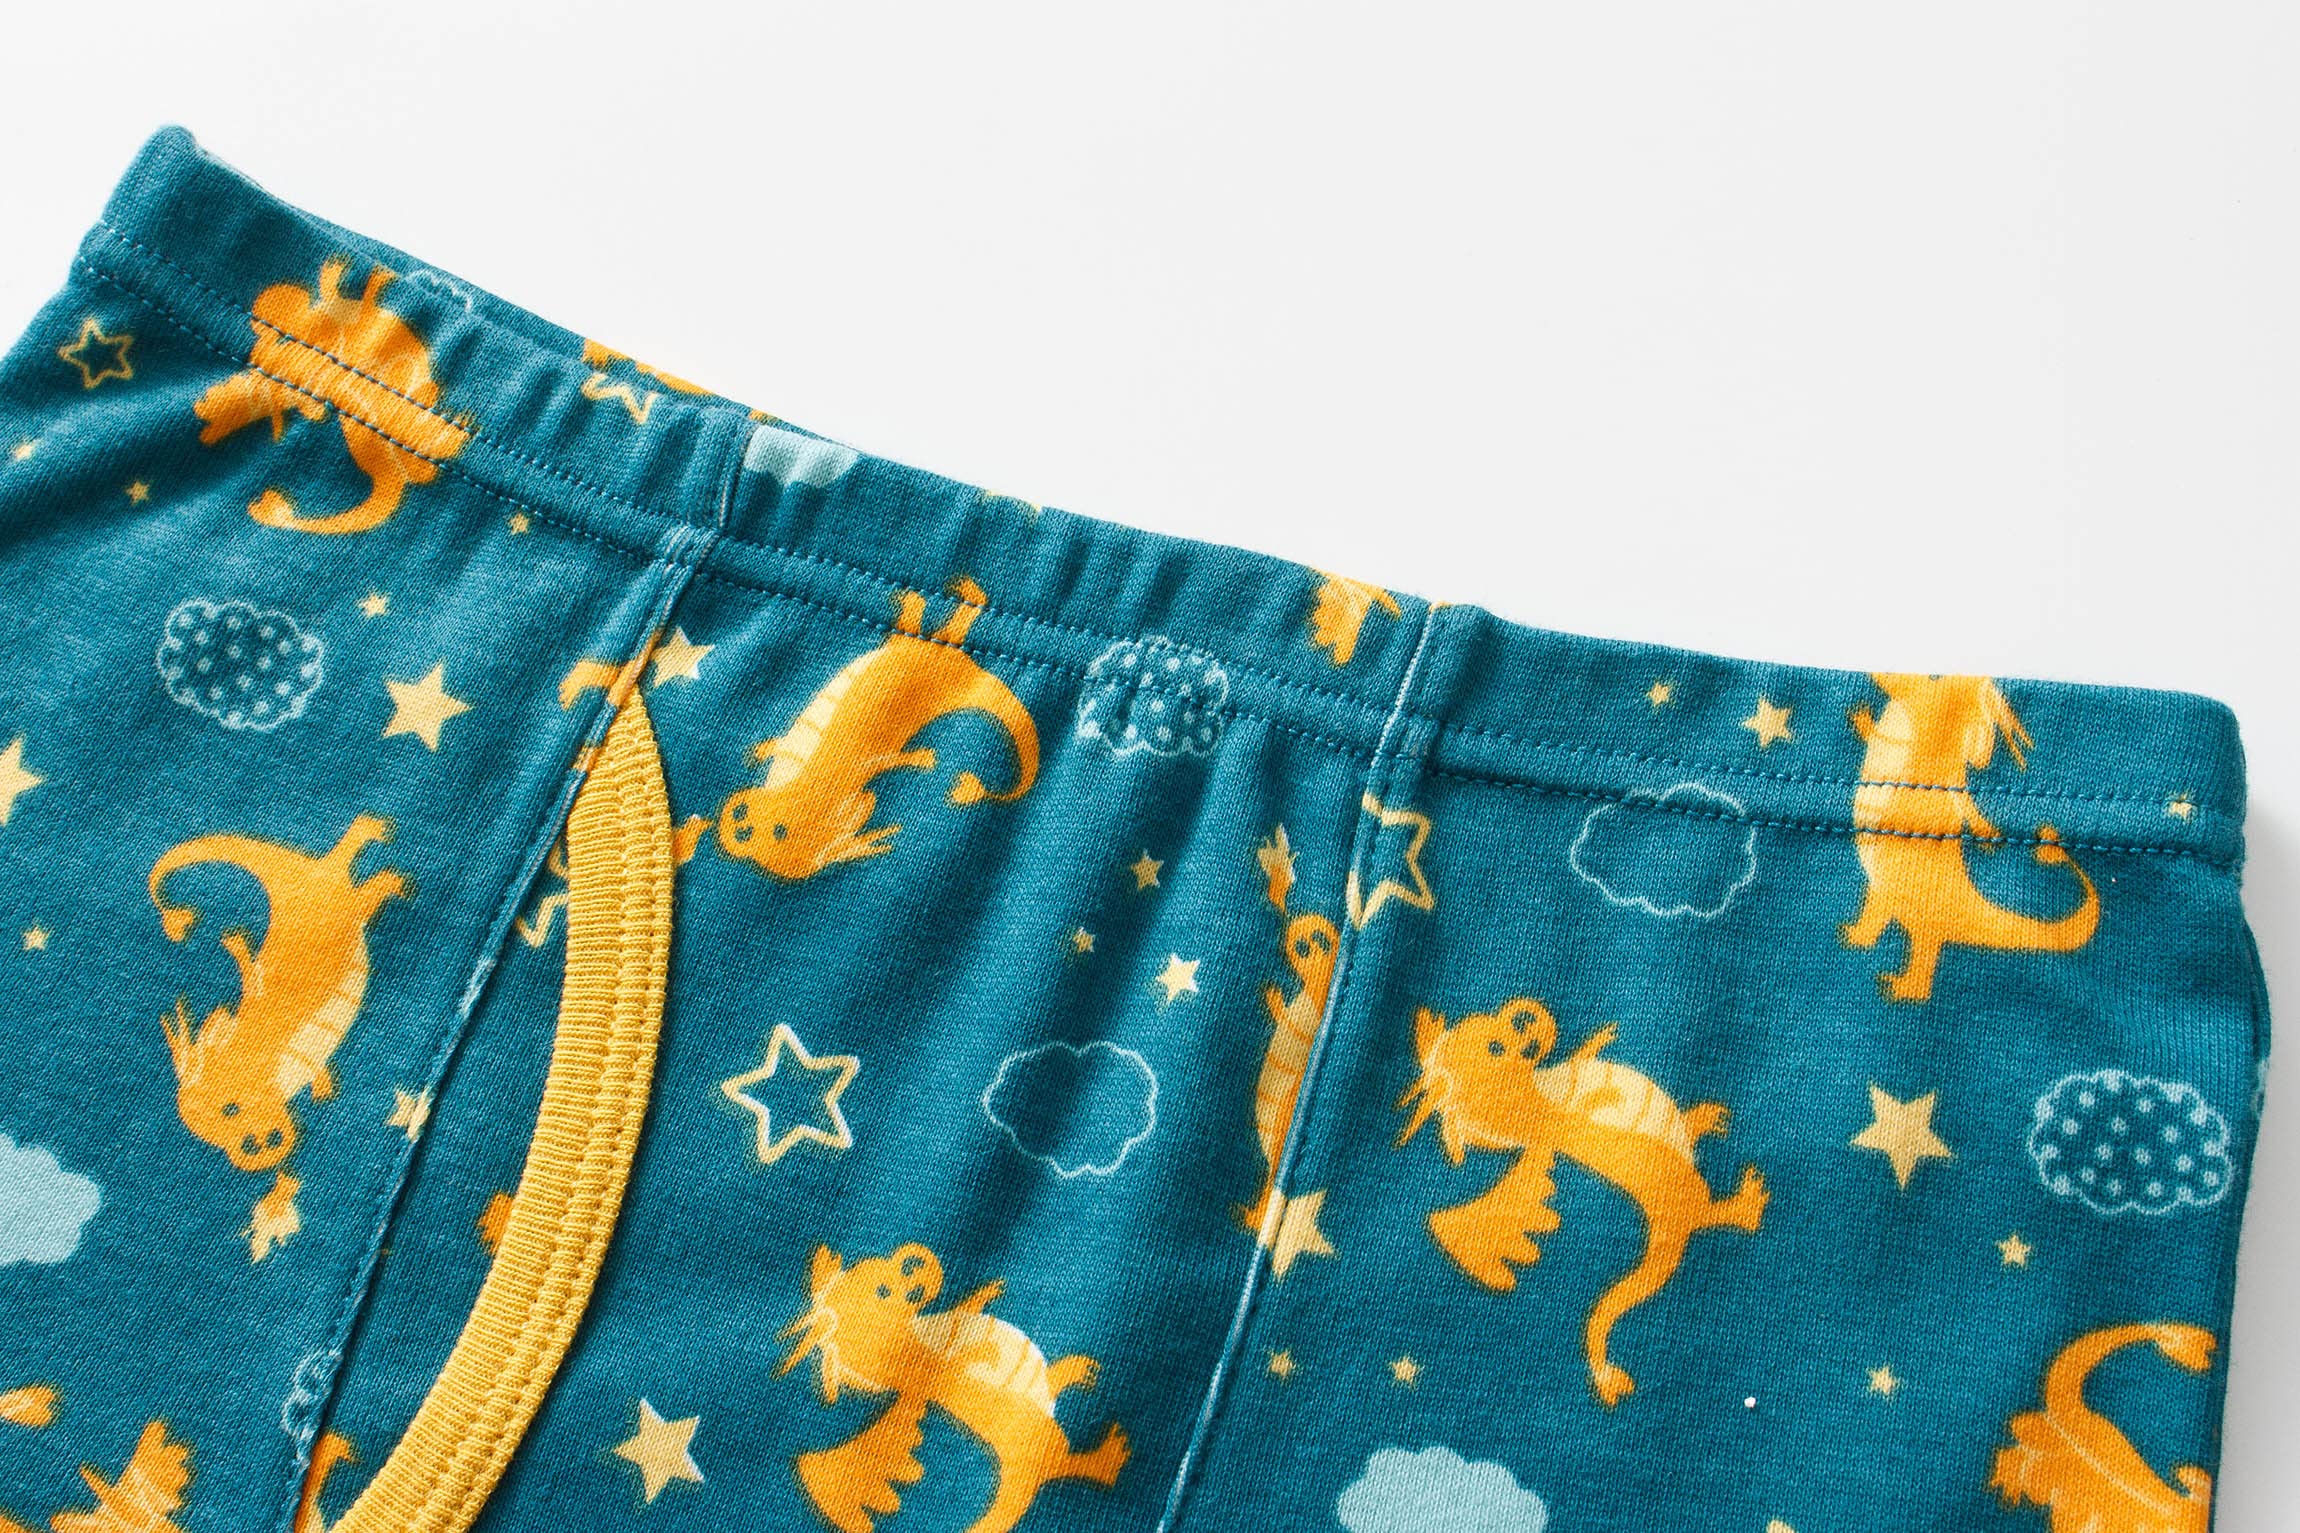 Boboking Little Boys Briefs Dinosaur Truck Toddler Kids Underwear (Pack of 6) 6/7Y Multicolor